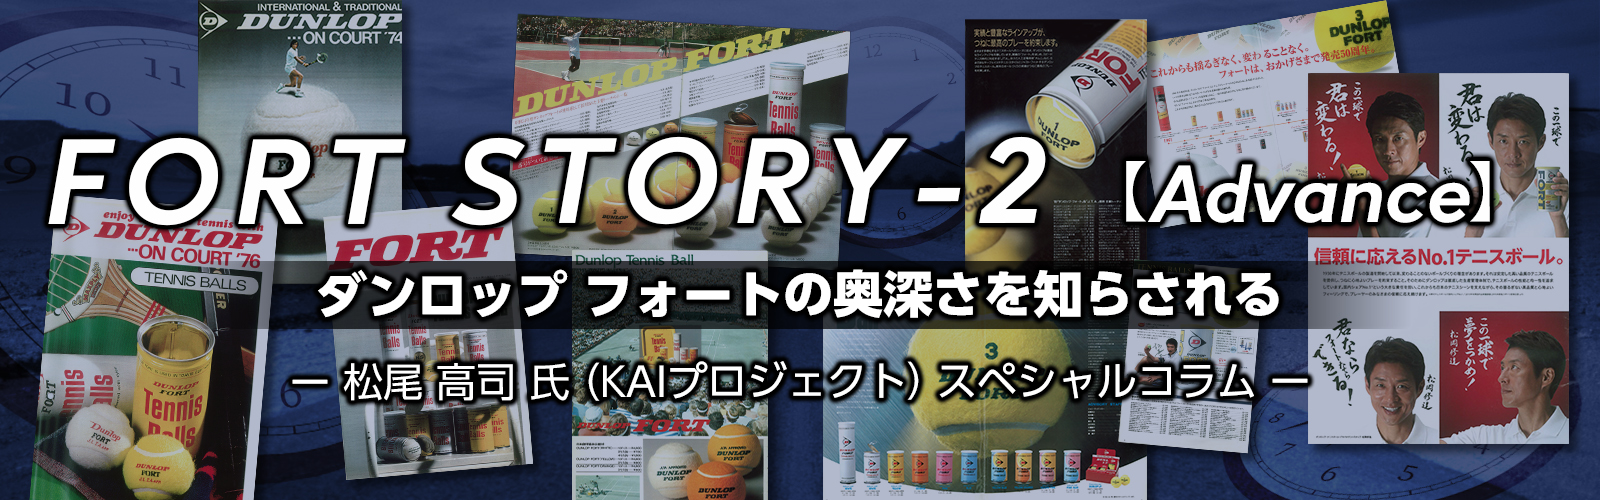 FORT STORY-2【Advance】